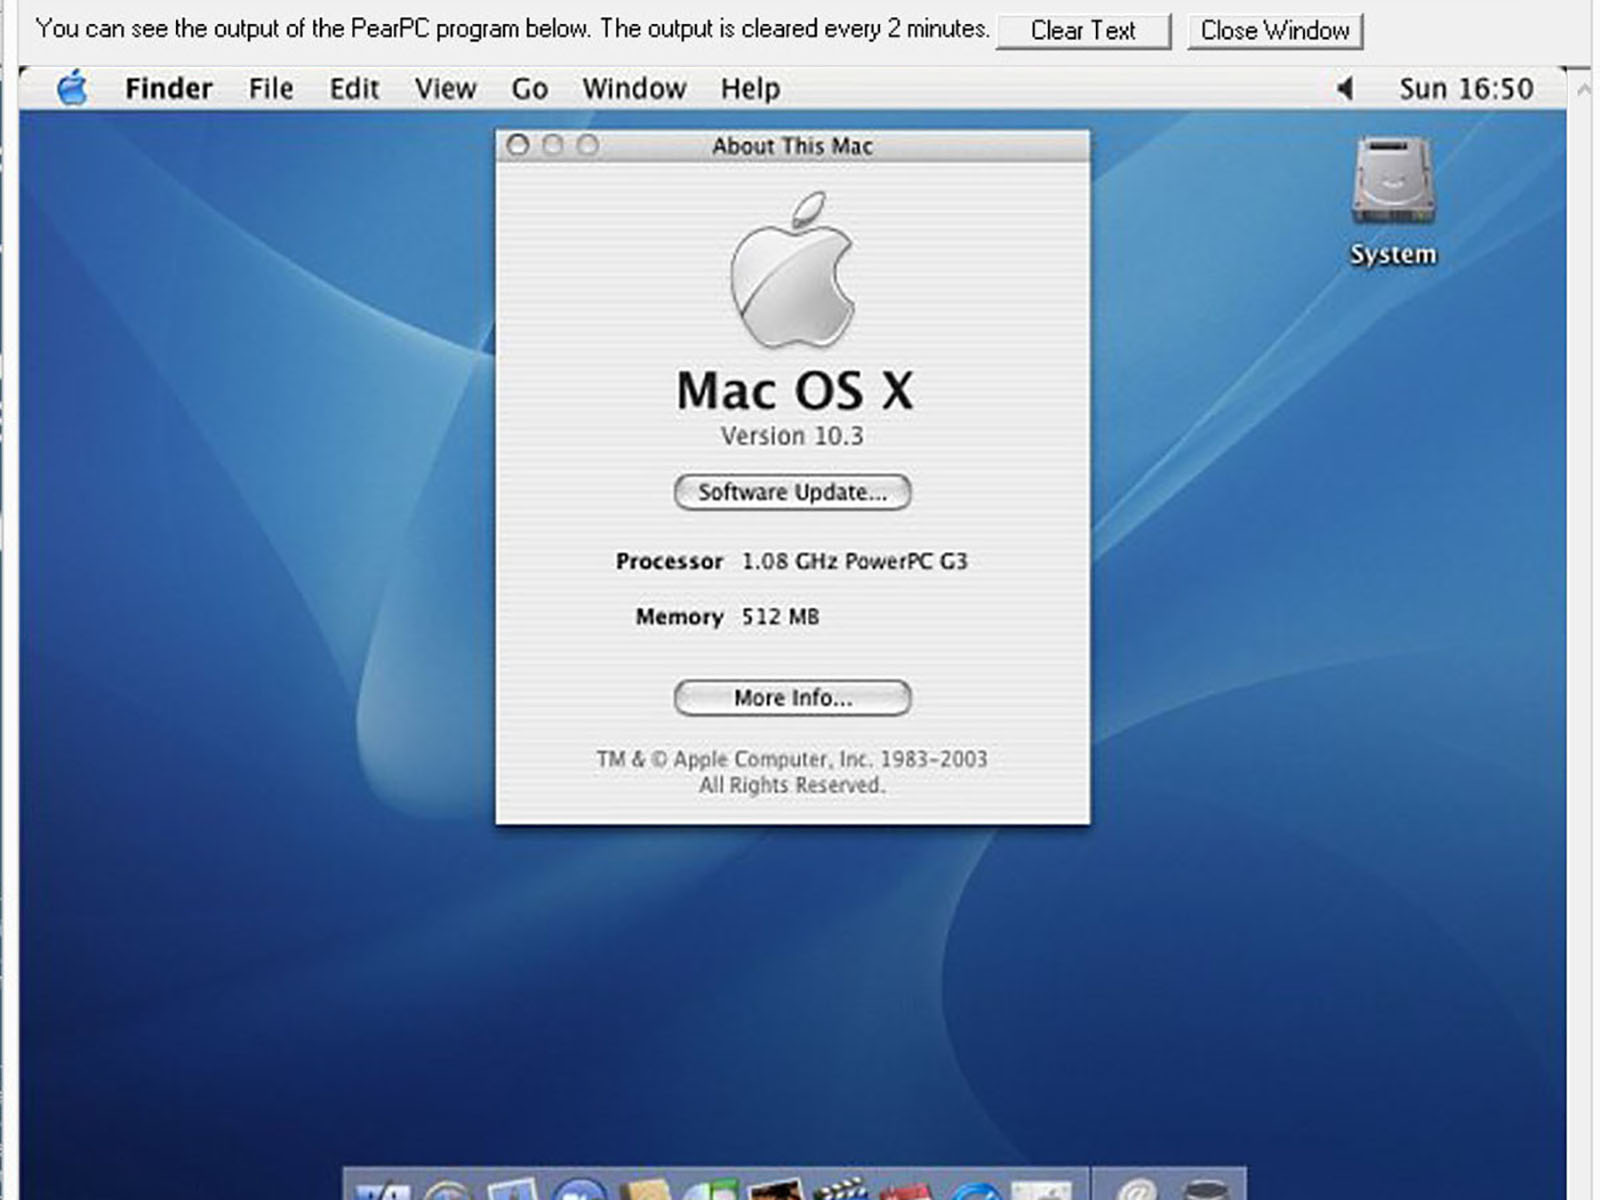 mac iso image for mac